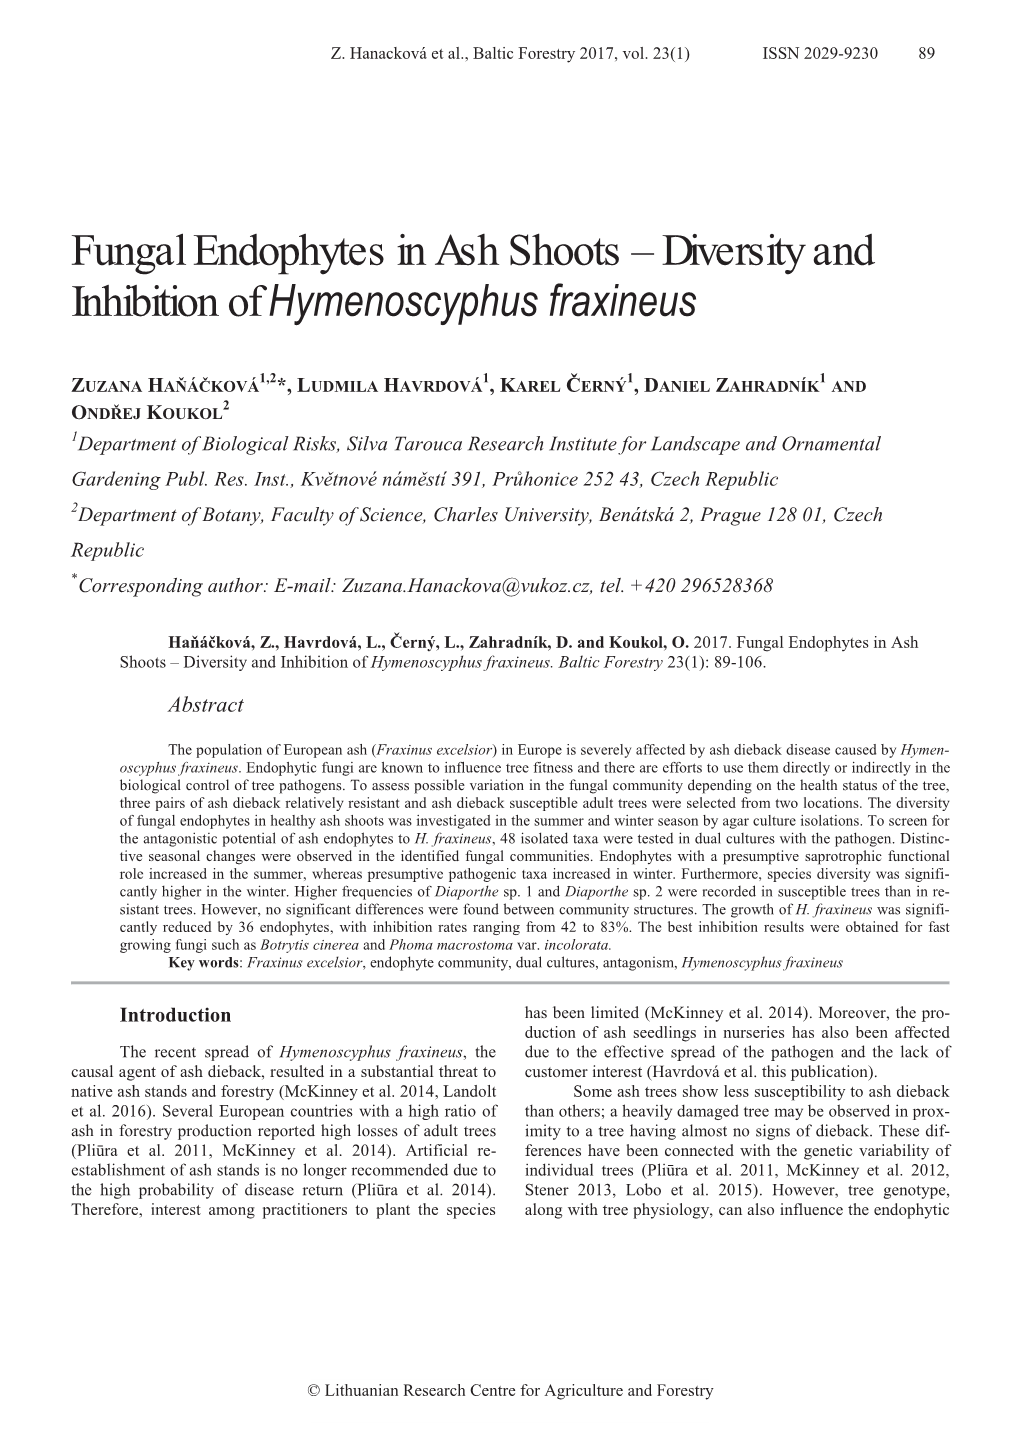 Fungal Endophytes in Ash Shoots – Diversity and Inhibition of Hymenoscyphus Fraxineus